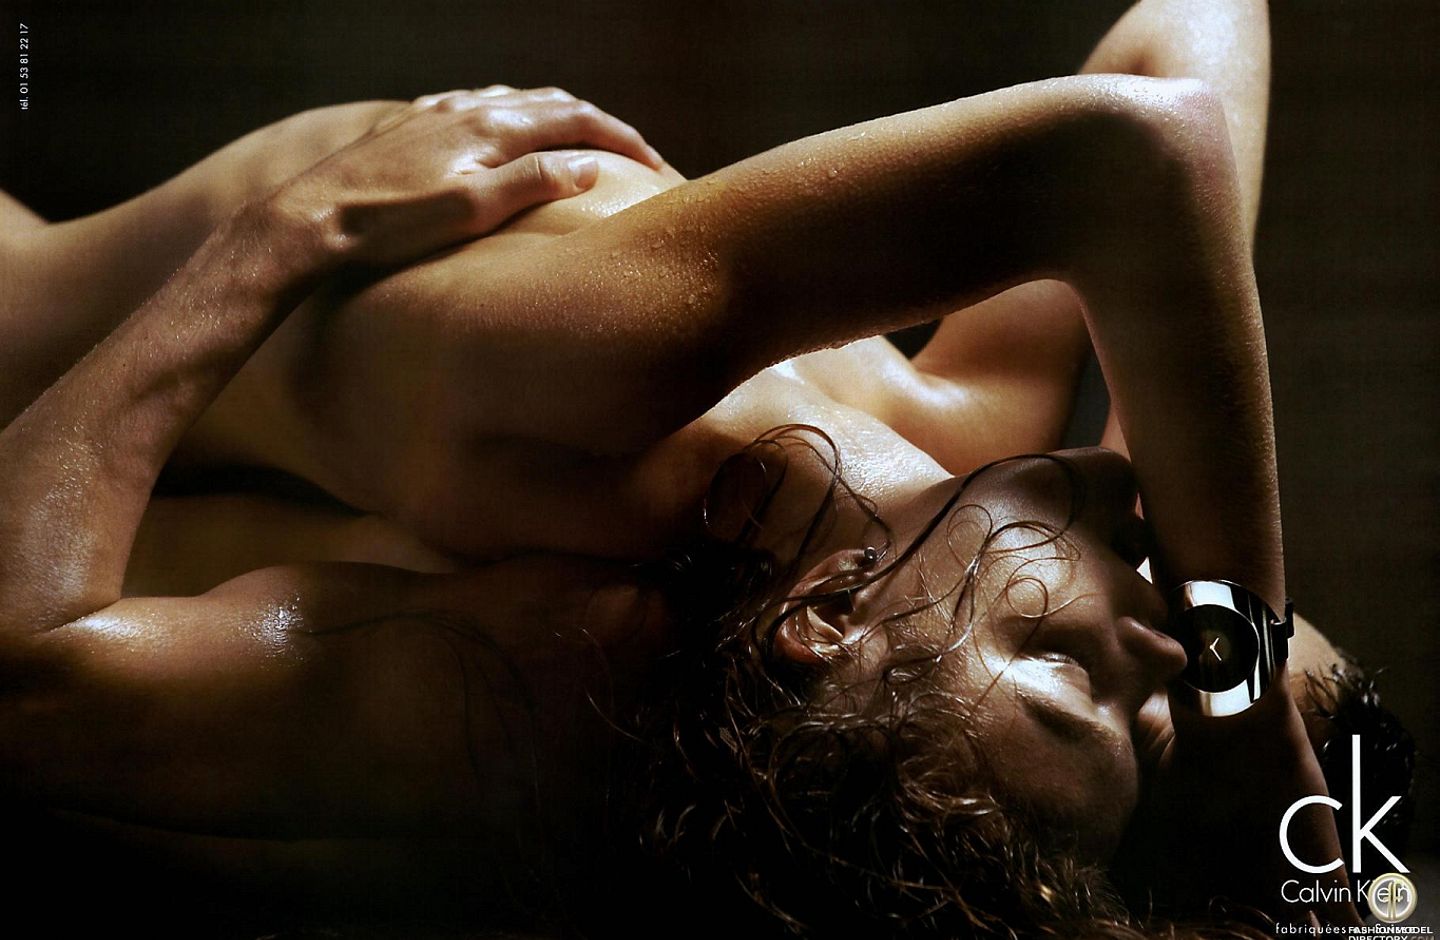 голая потная красотка во время секса - реклама CALVIN KLEIN, реклама с обнаженным телом фото 5